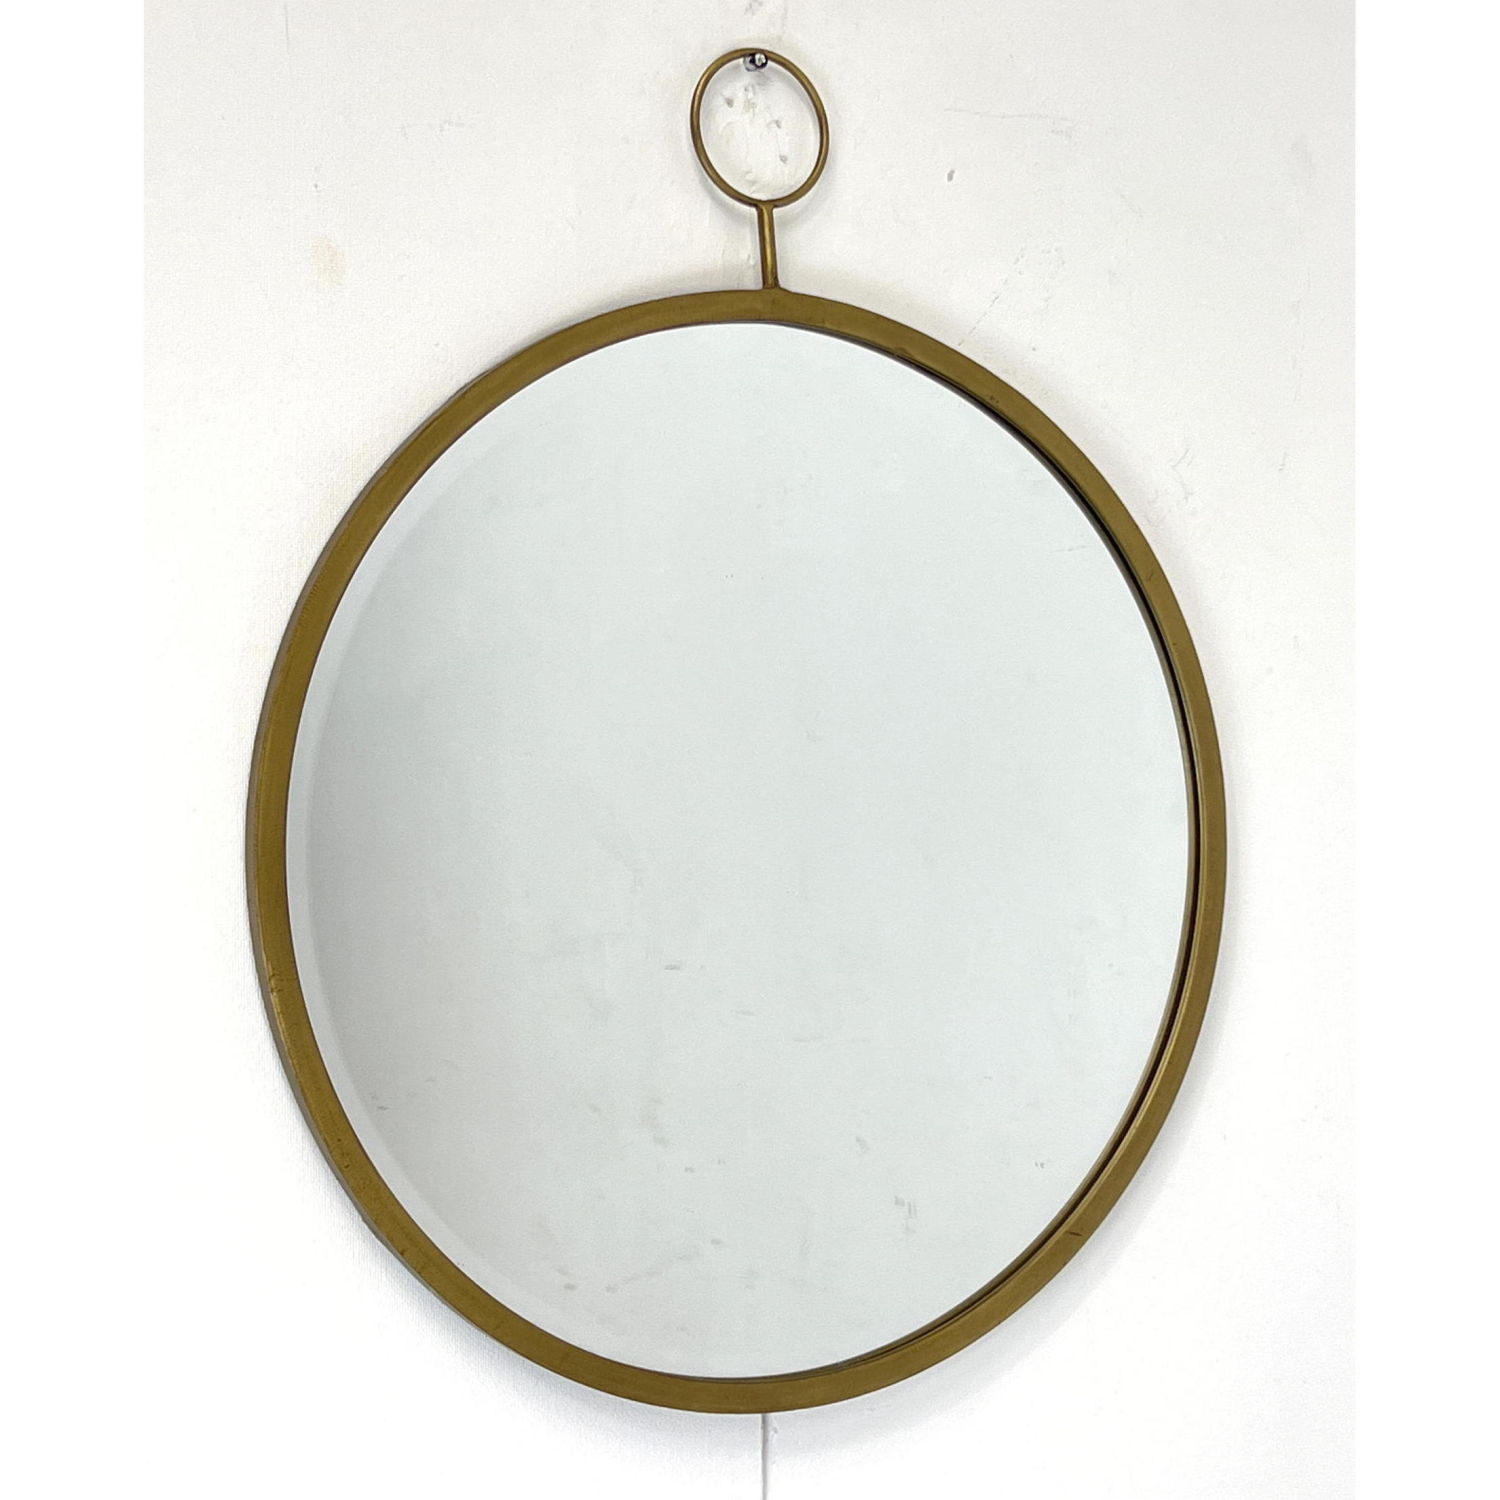 Brass Frame Hanging Wall Mirror.